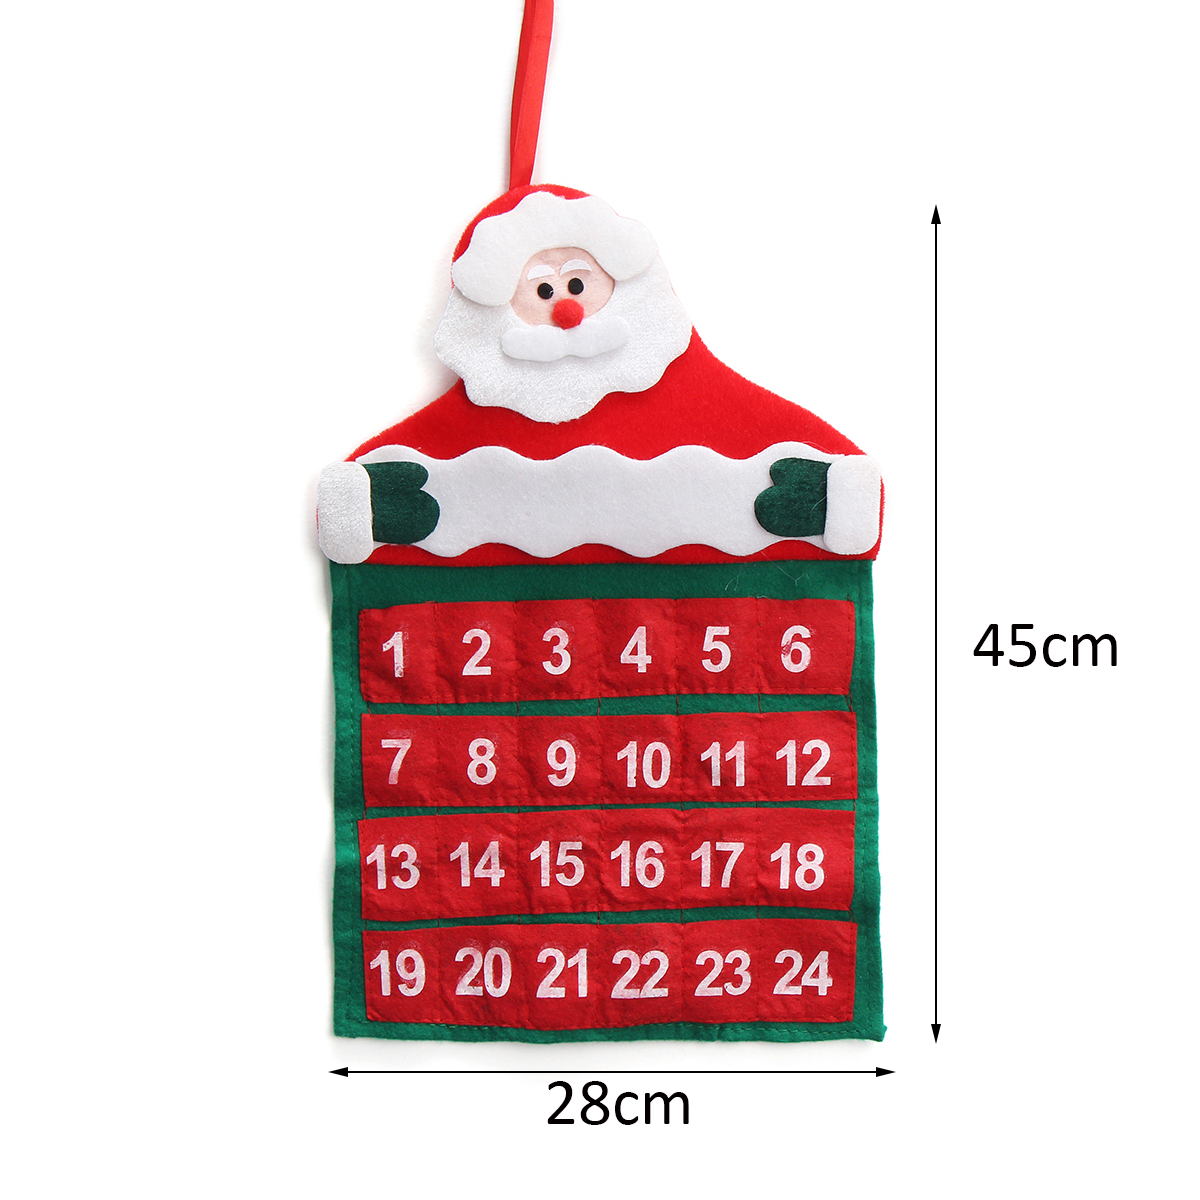 Felt-Christmas-Advent-Wall-Hanging-Calendar-Pockets-Santa-Reindeer-Snowman-Decorations-1462546-10